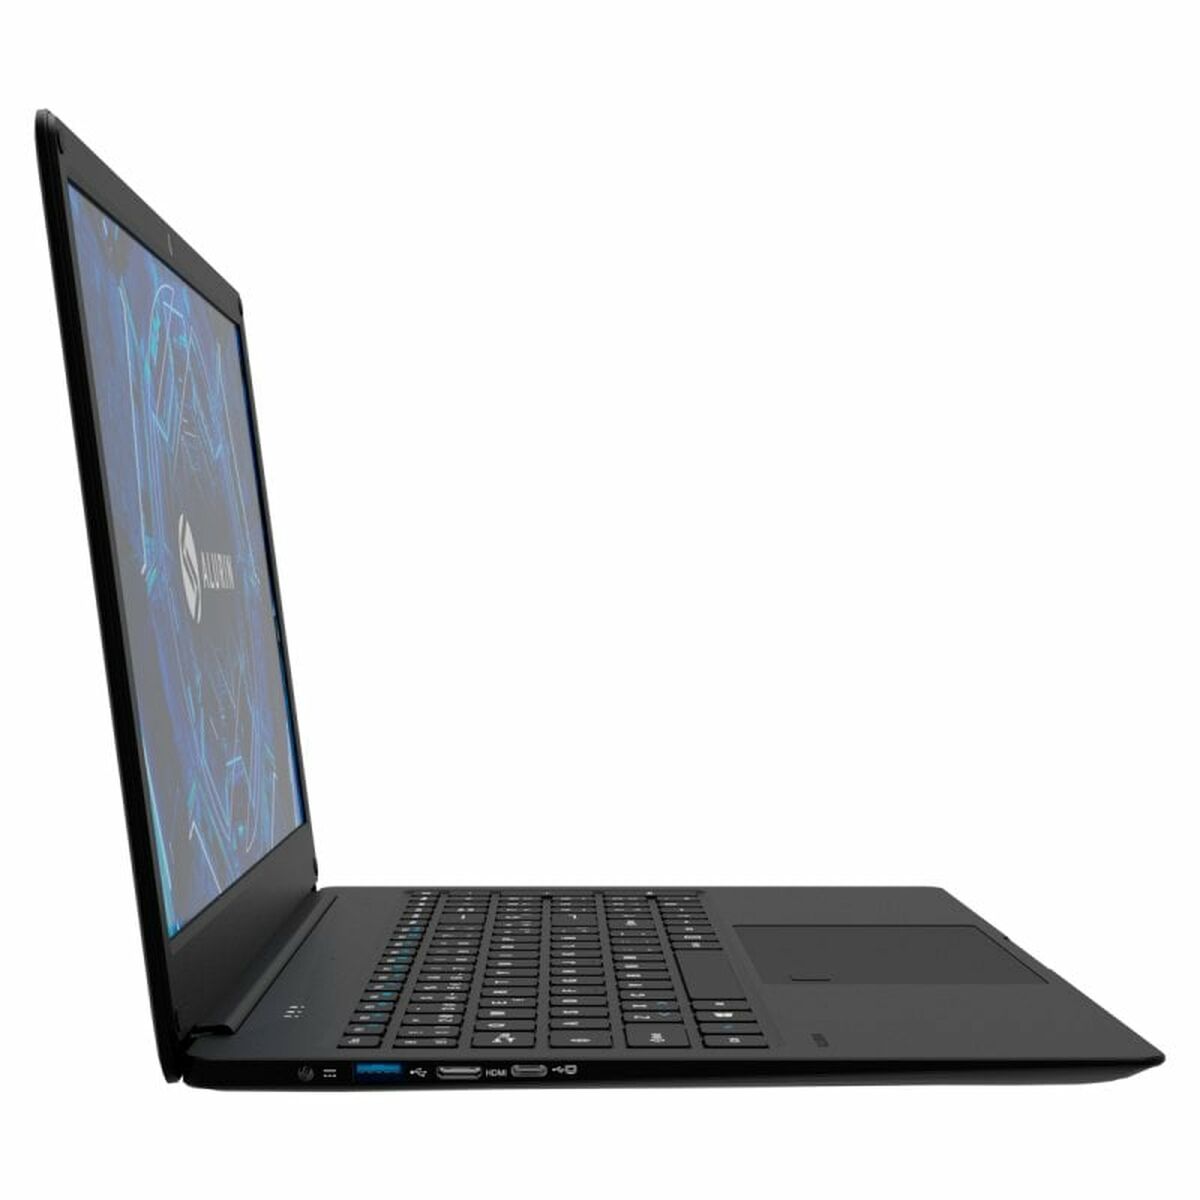 Laptop Alurin Go Start 15,6" Intel Celeron N4020 8 GB RAM 256 GB SSD Qwerty Spanisch - CA International 